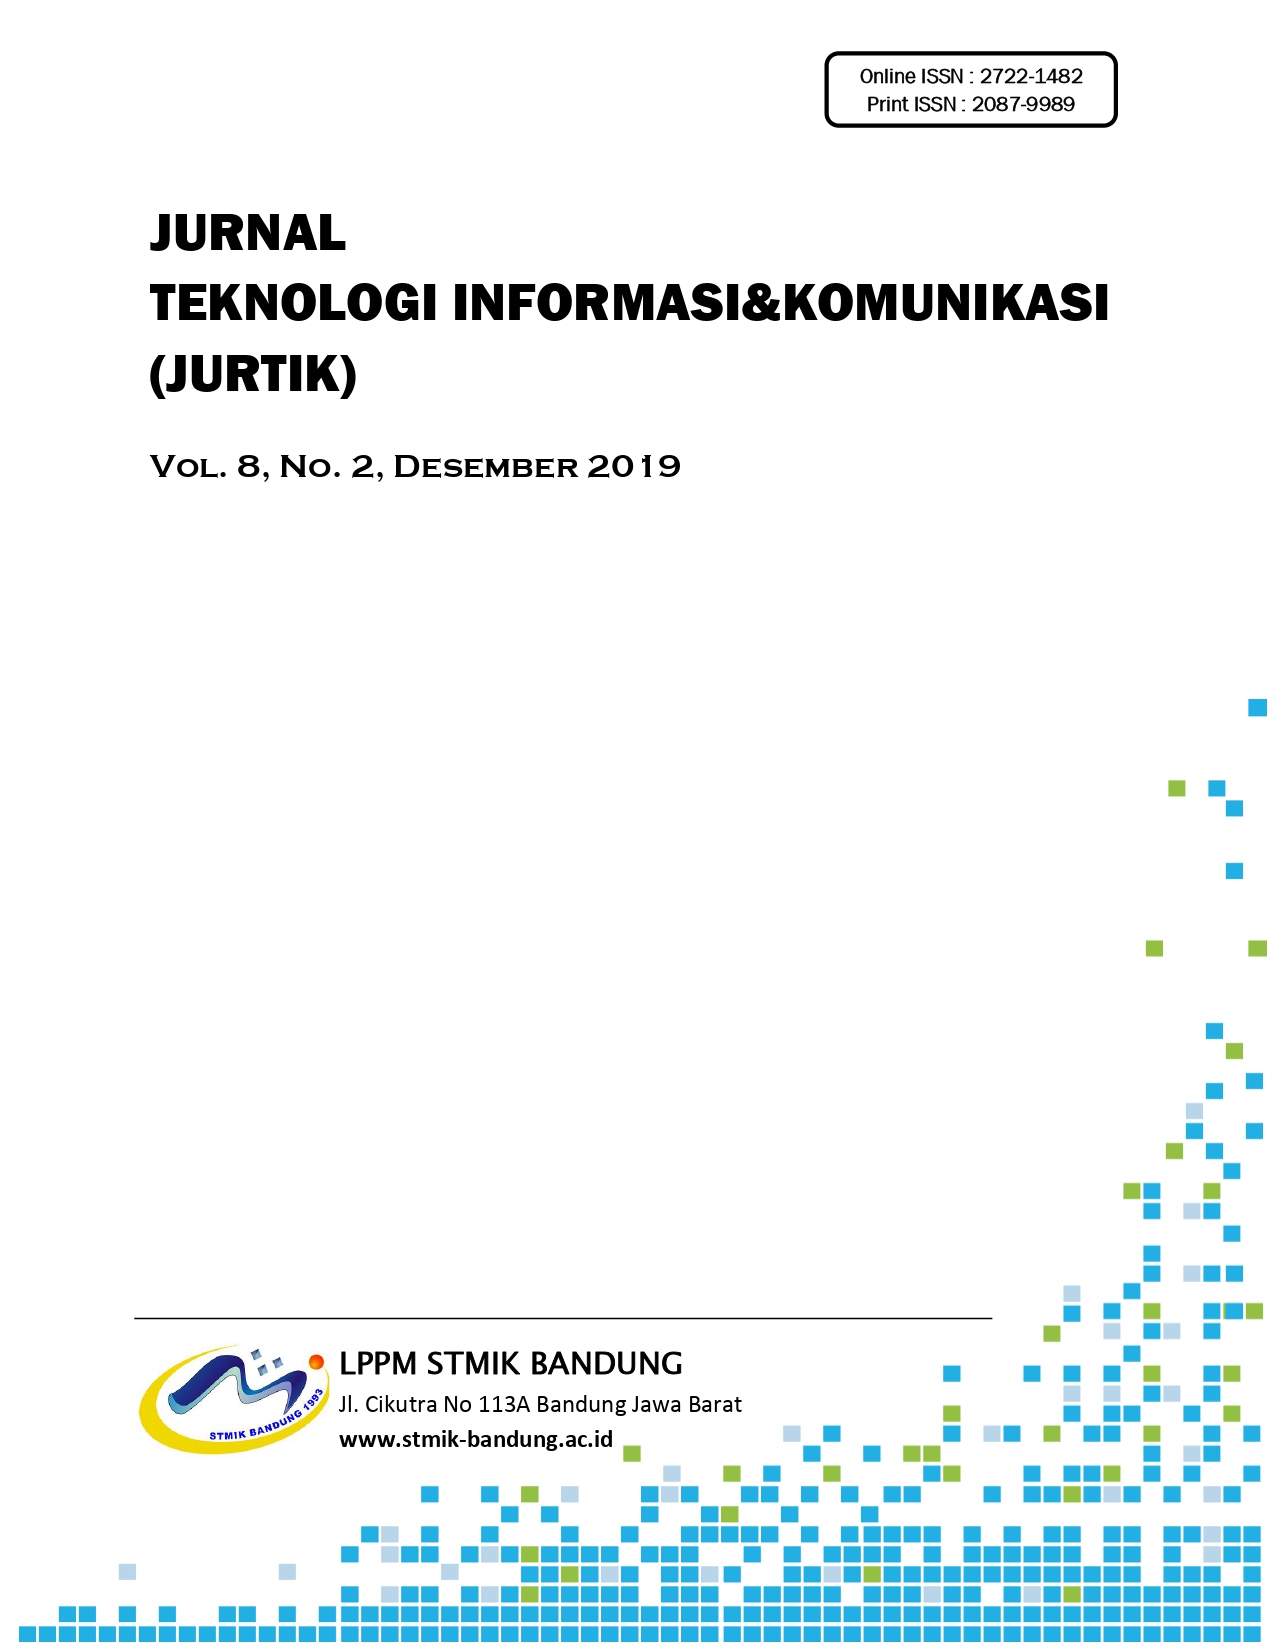 JURTIK STMIK Bandung Vol 9 No.2 2019